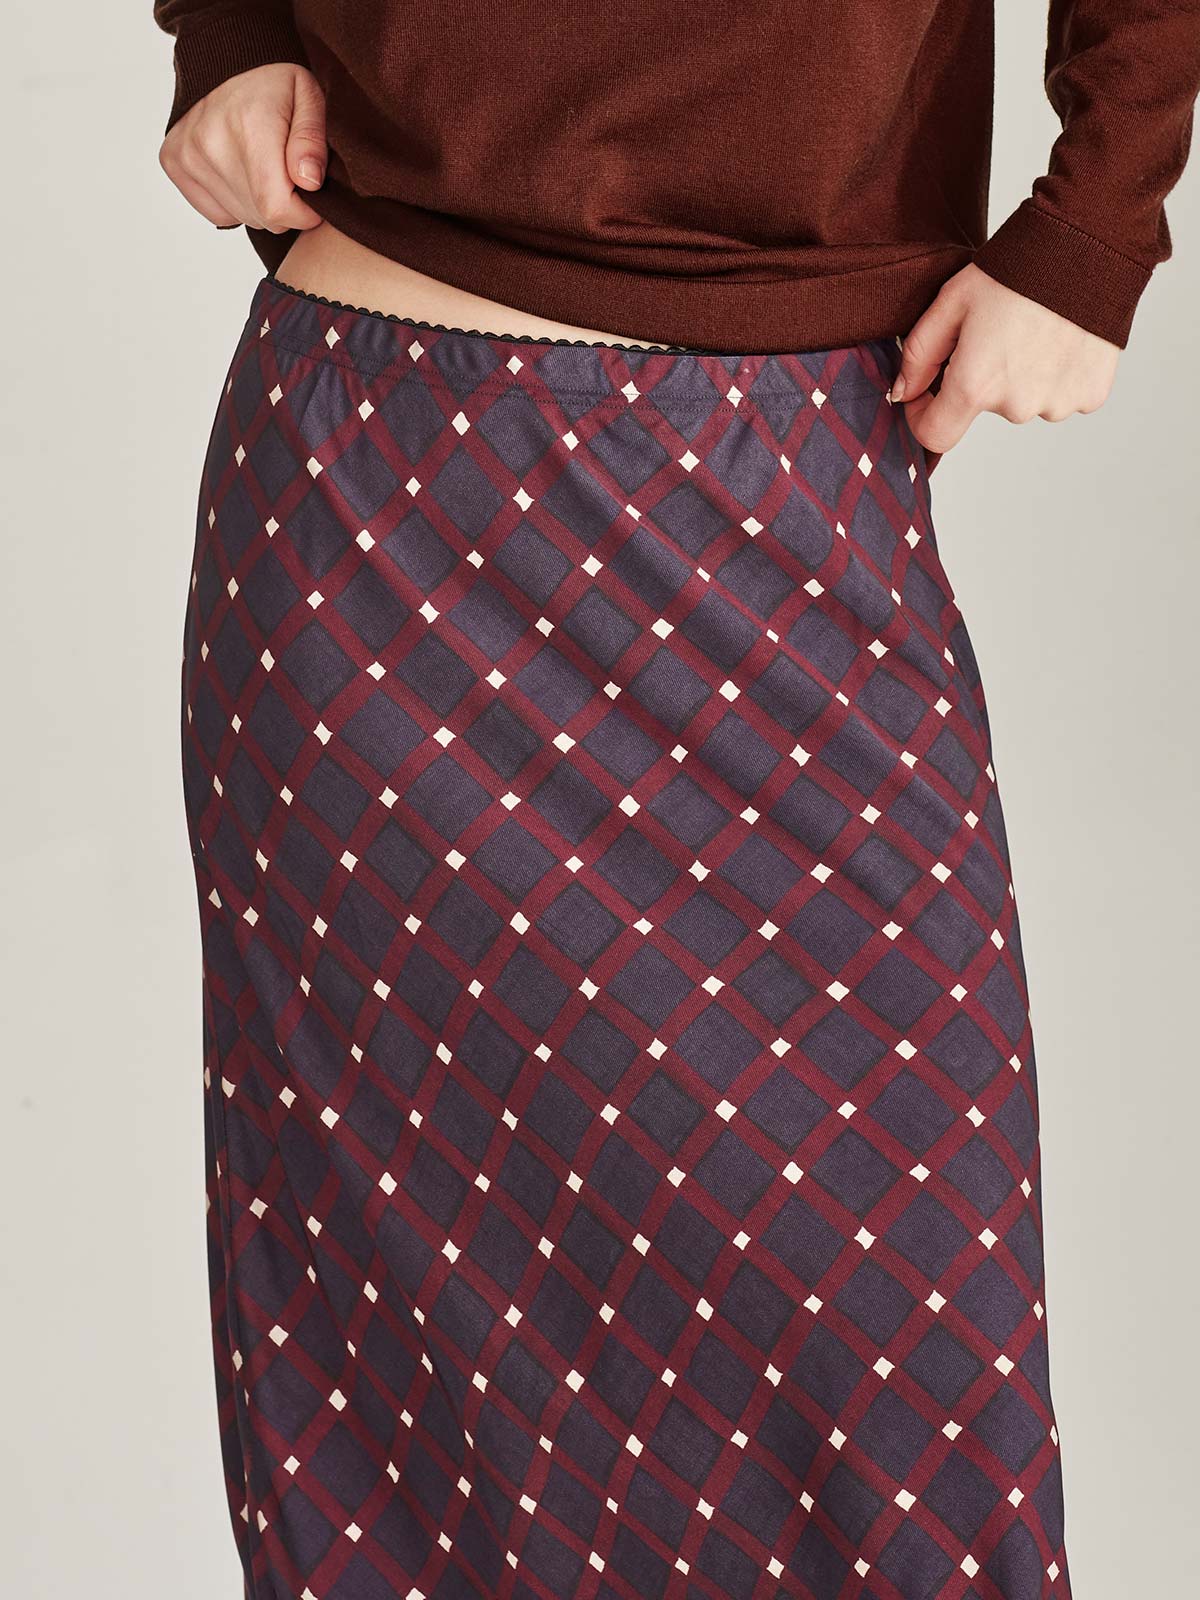 Bella Checkers Skirt